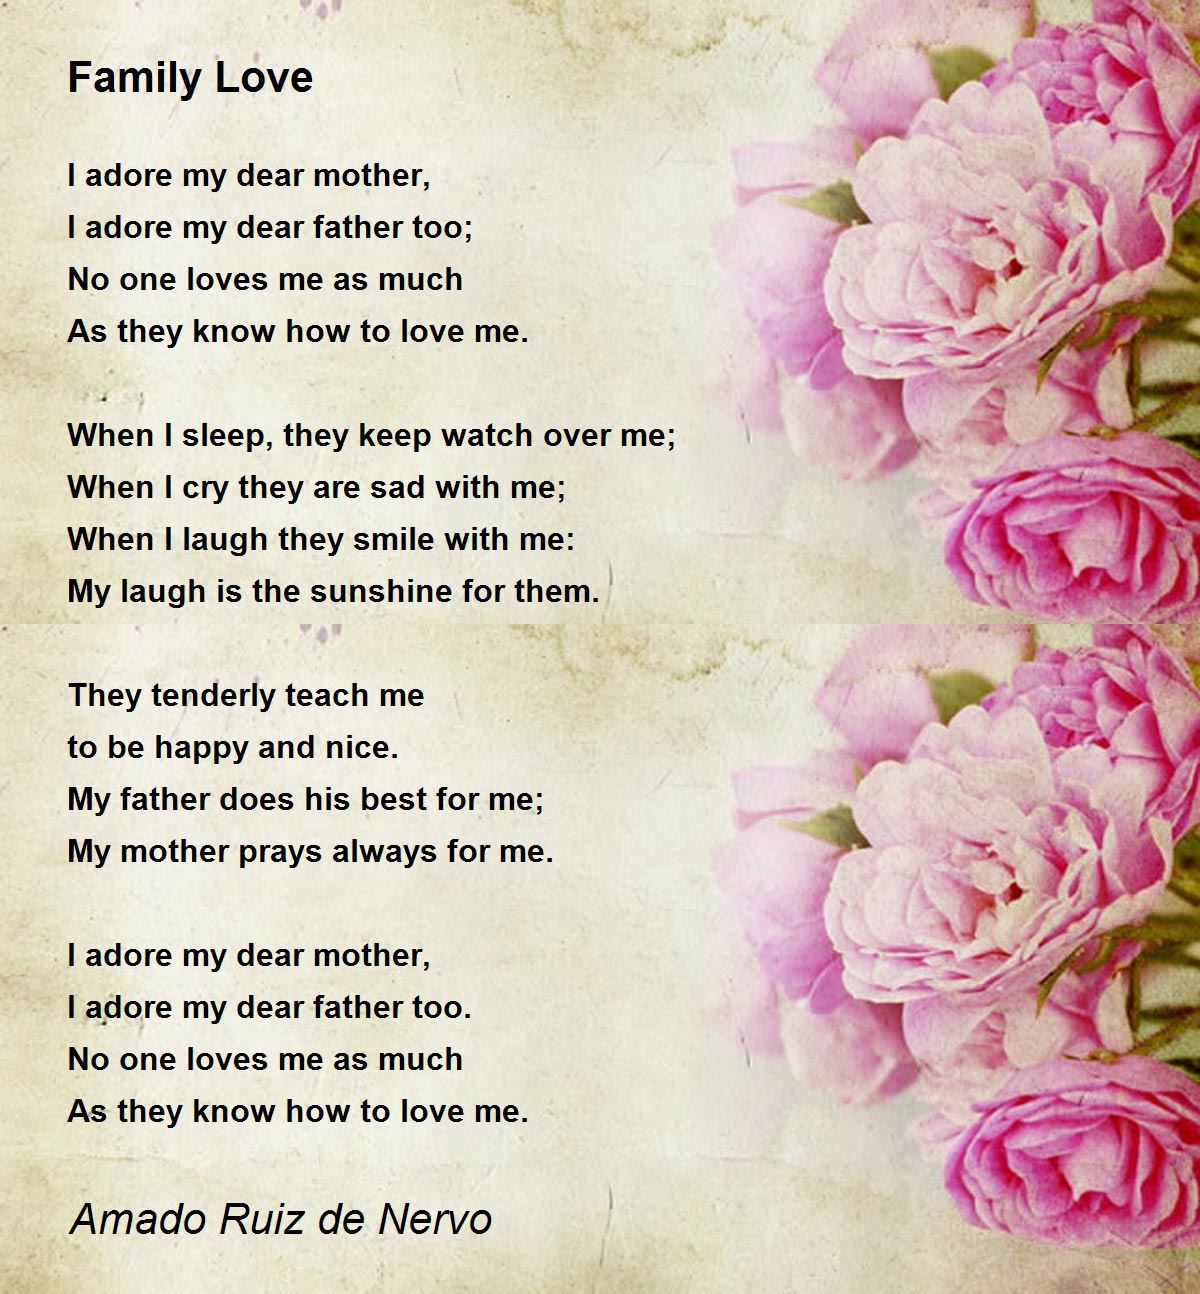 Family Love - Family Love Poem by Amado Ruiz de Nervo